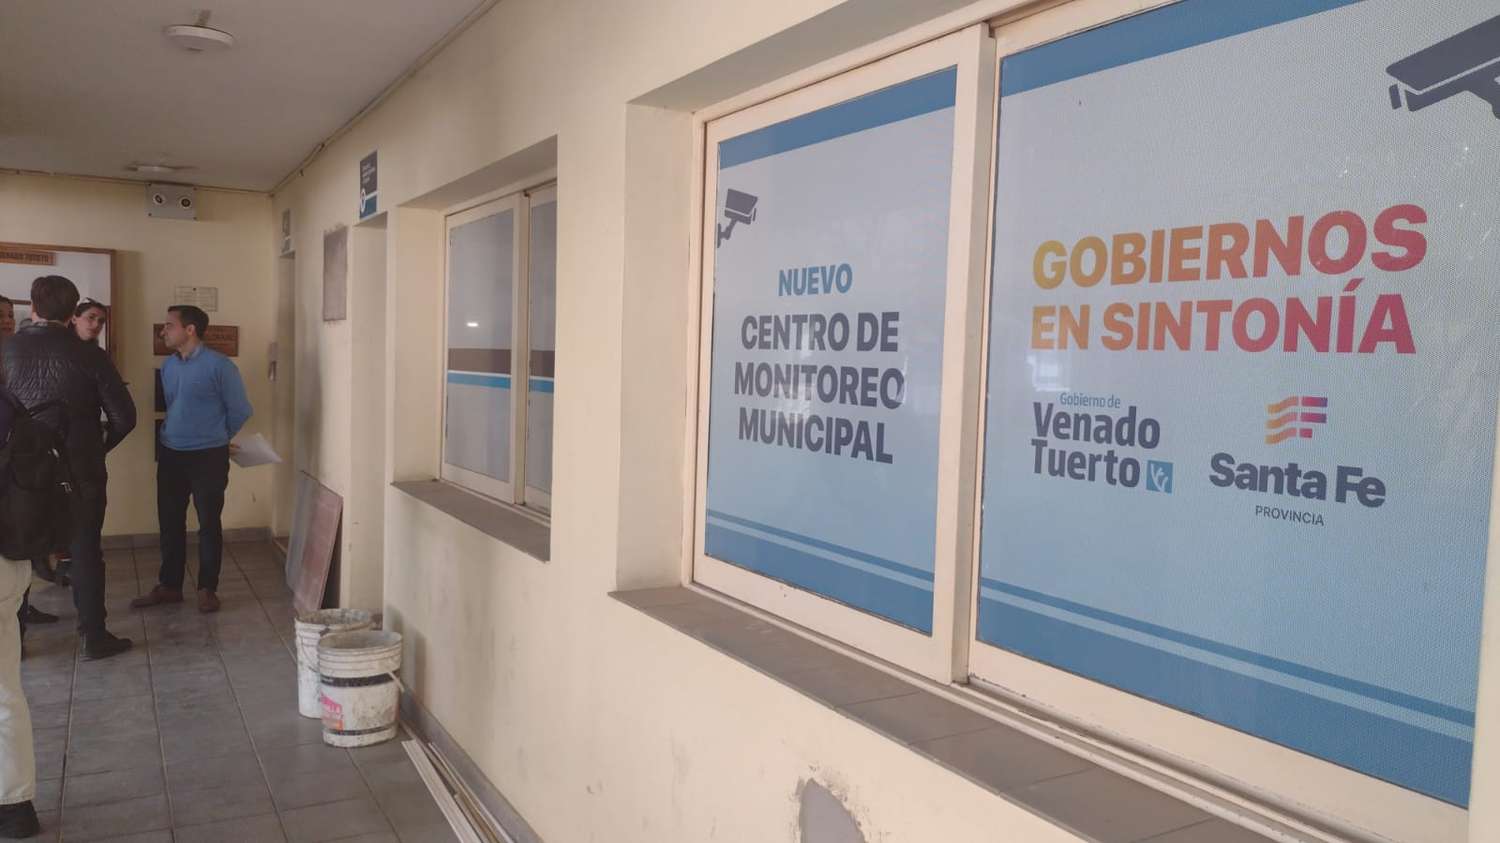 Nuevo Centro de Monitoreo Municipal de Venado Tuerto